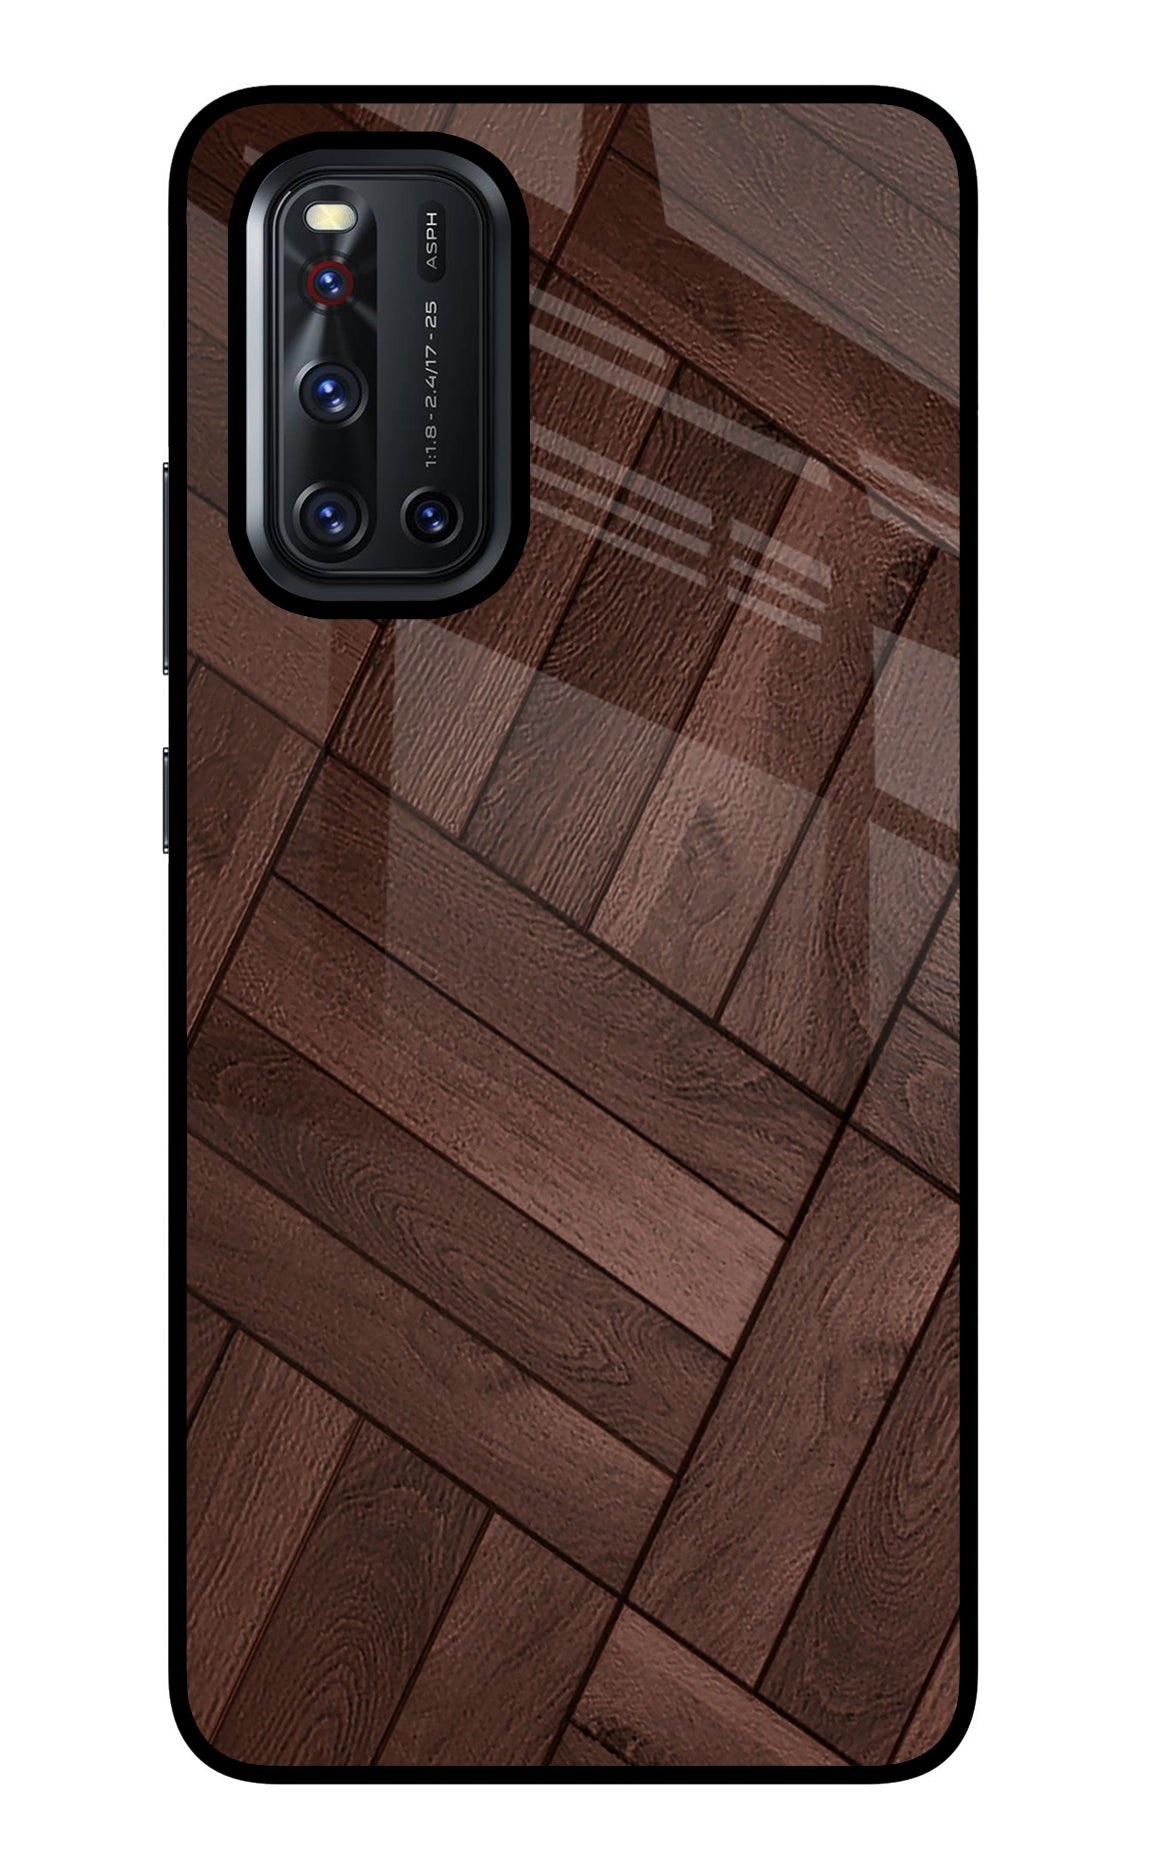 Wooden Texture Design Vivo V19 Glass Case